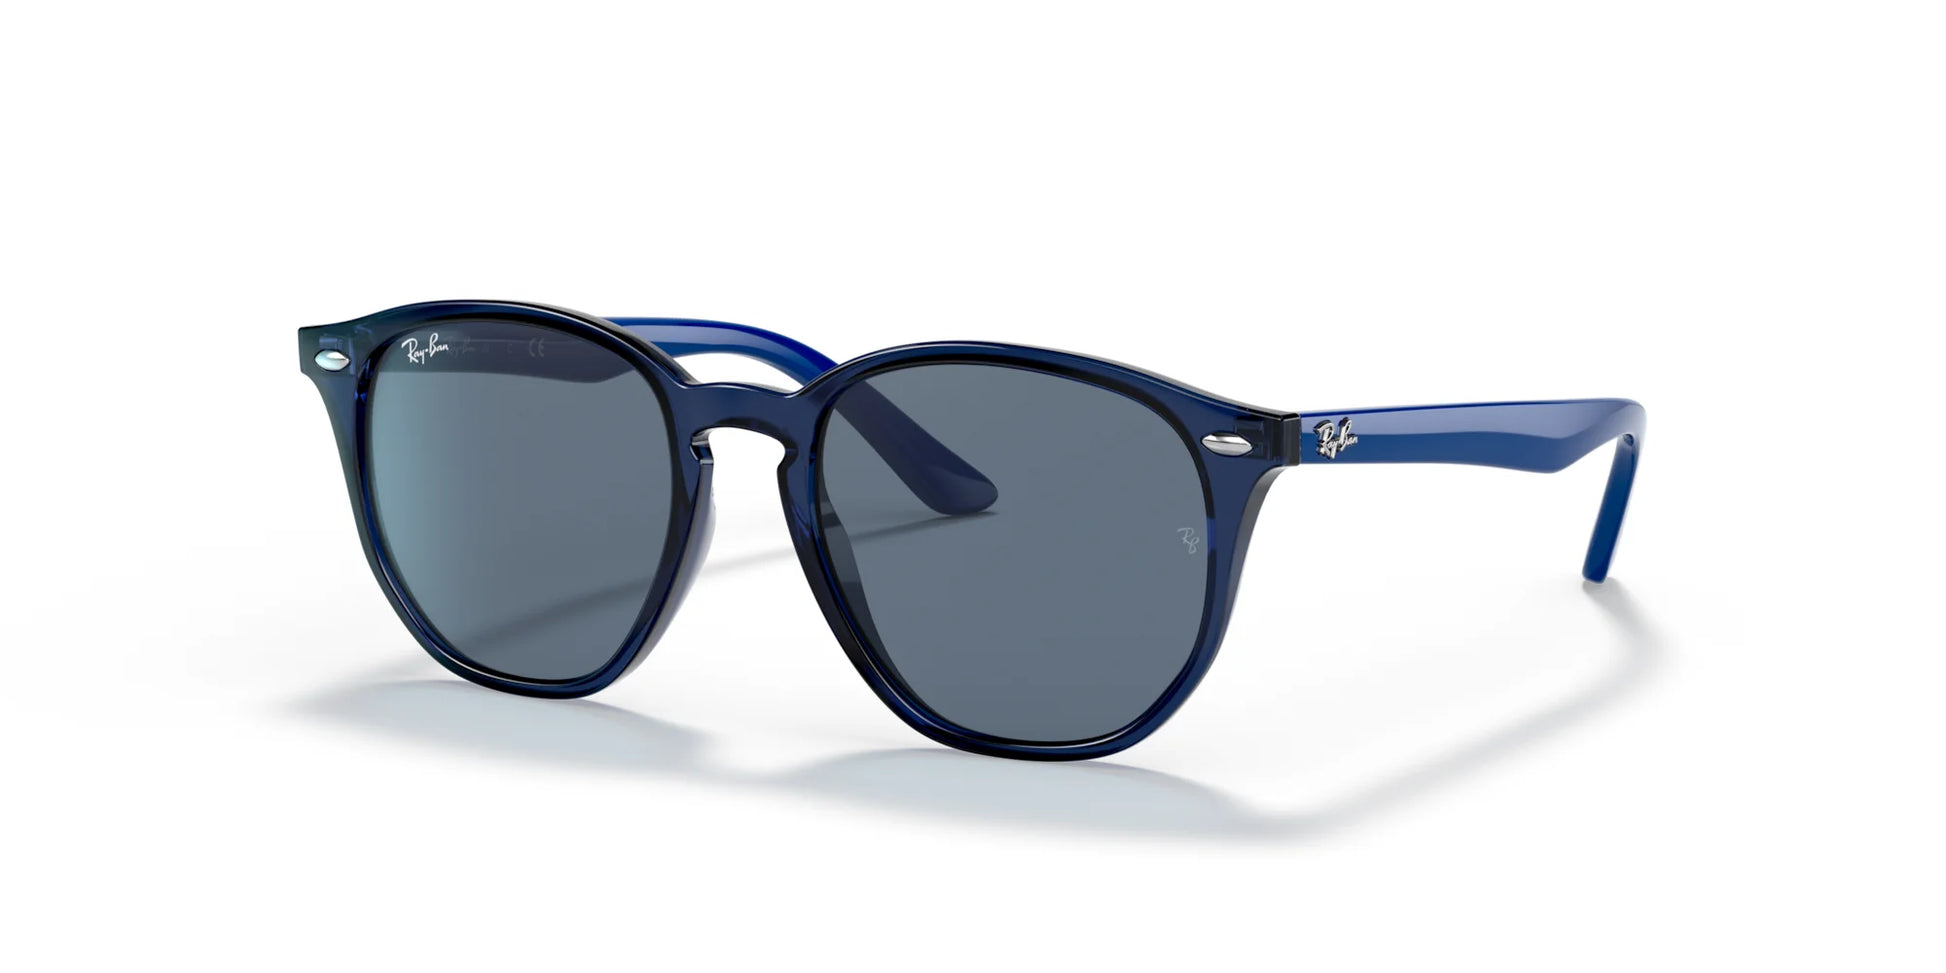 Ray-Ban RJ9070S Sunglasses Transparent Blue / Dark Blue